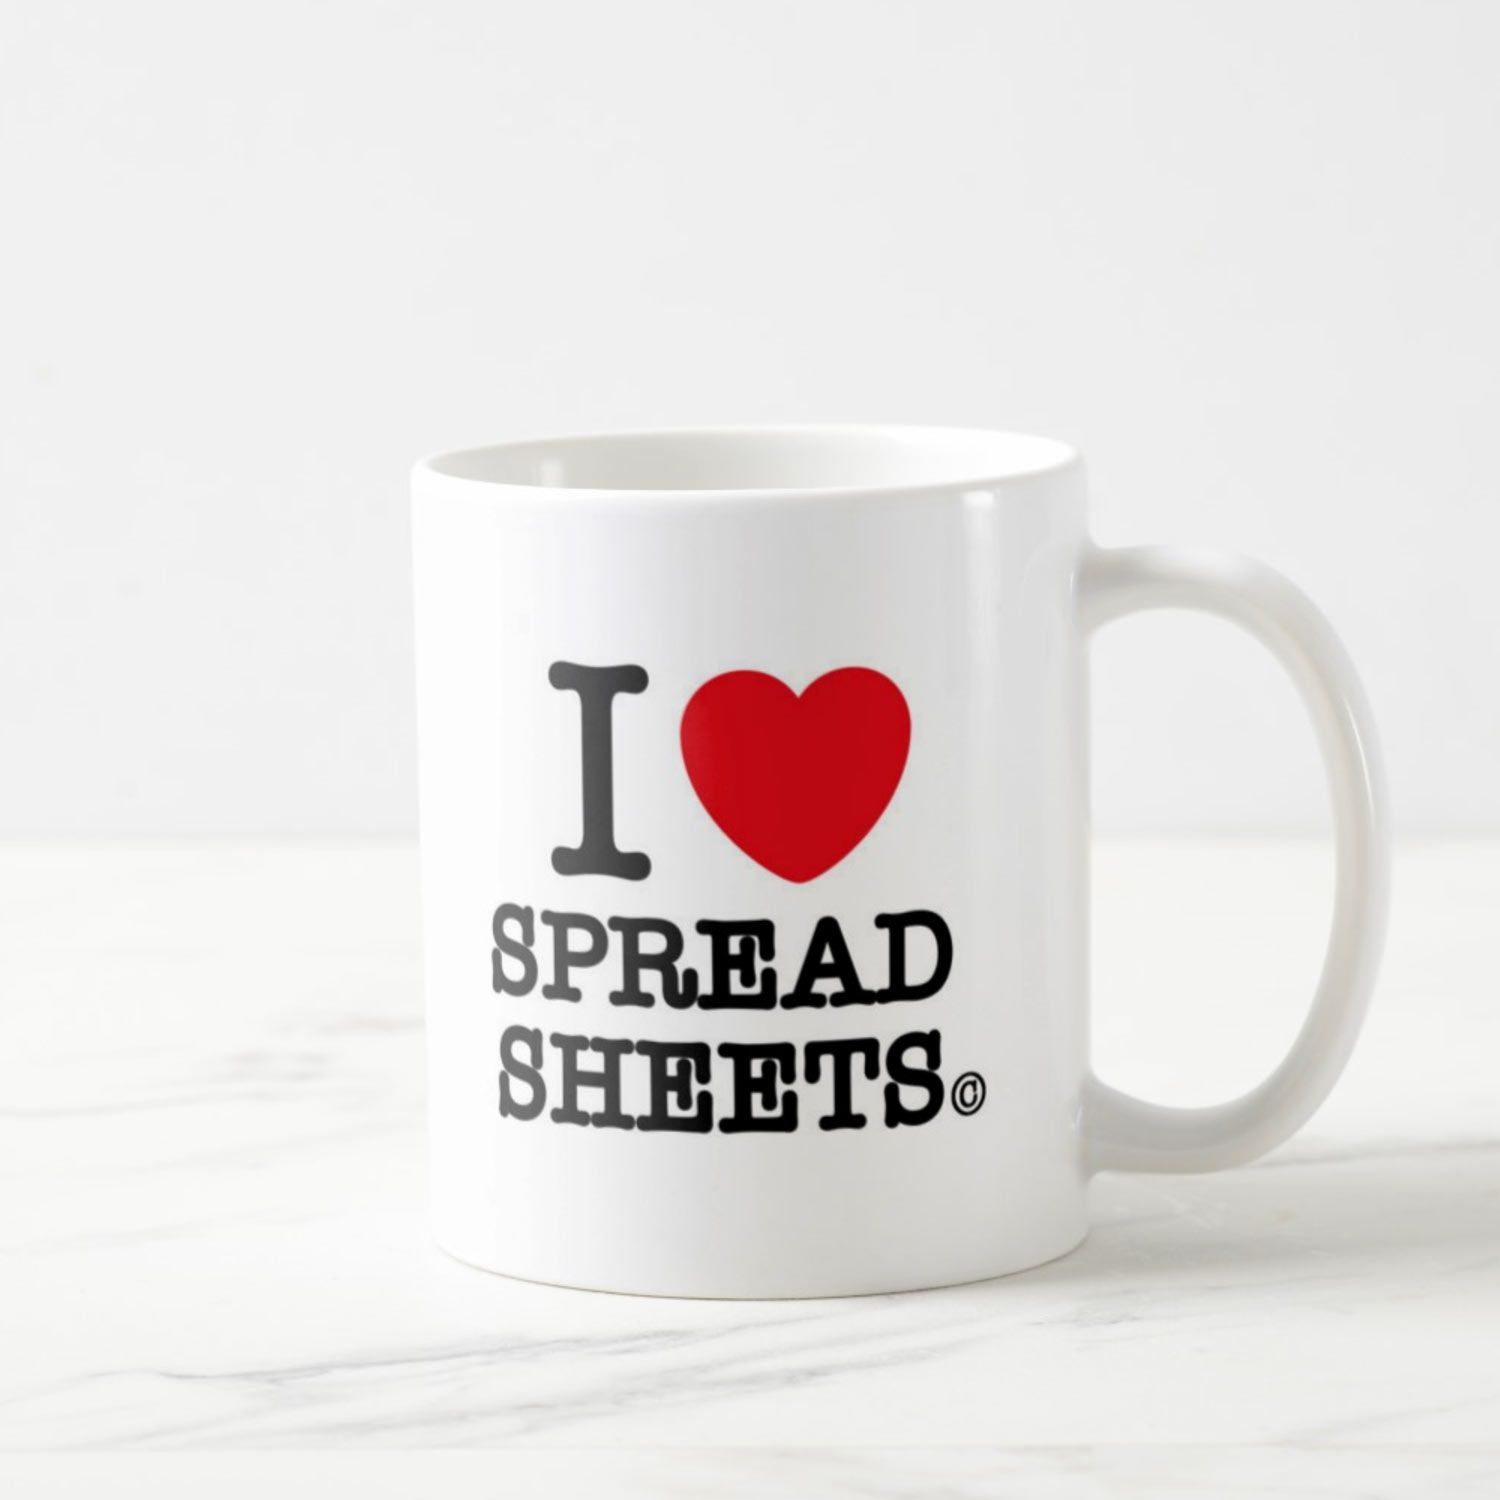 Excel Spreadsheet Mug Throughout I Heart Spreadsheets Mug Stunning How To Make An Excel Spreadsheet